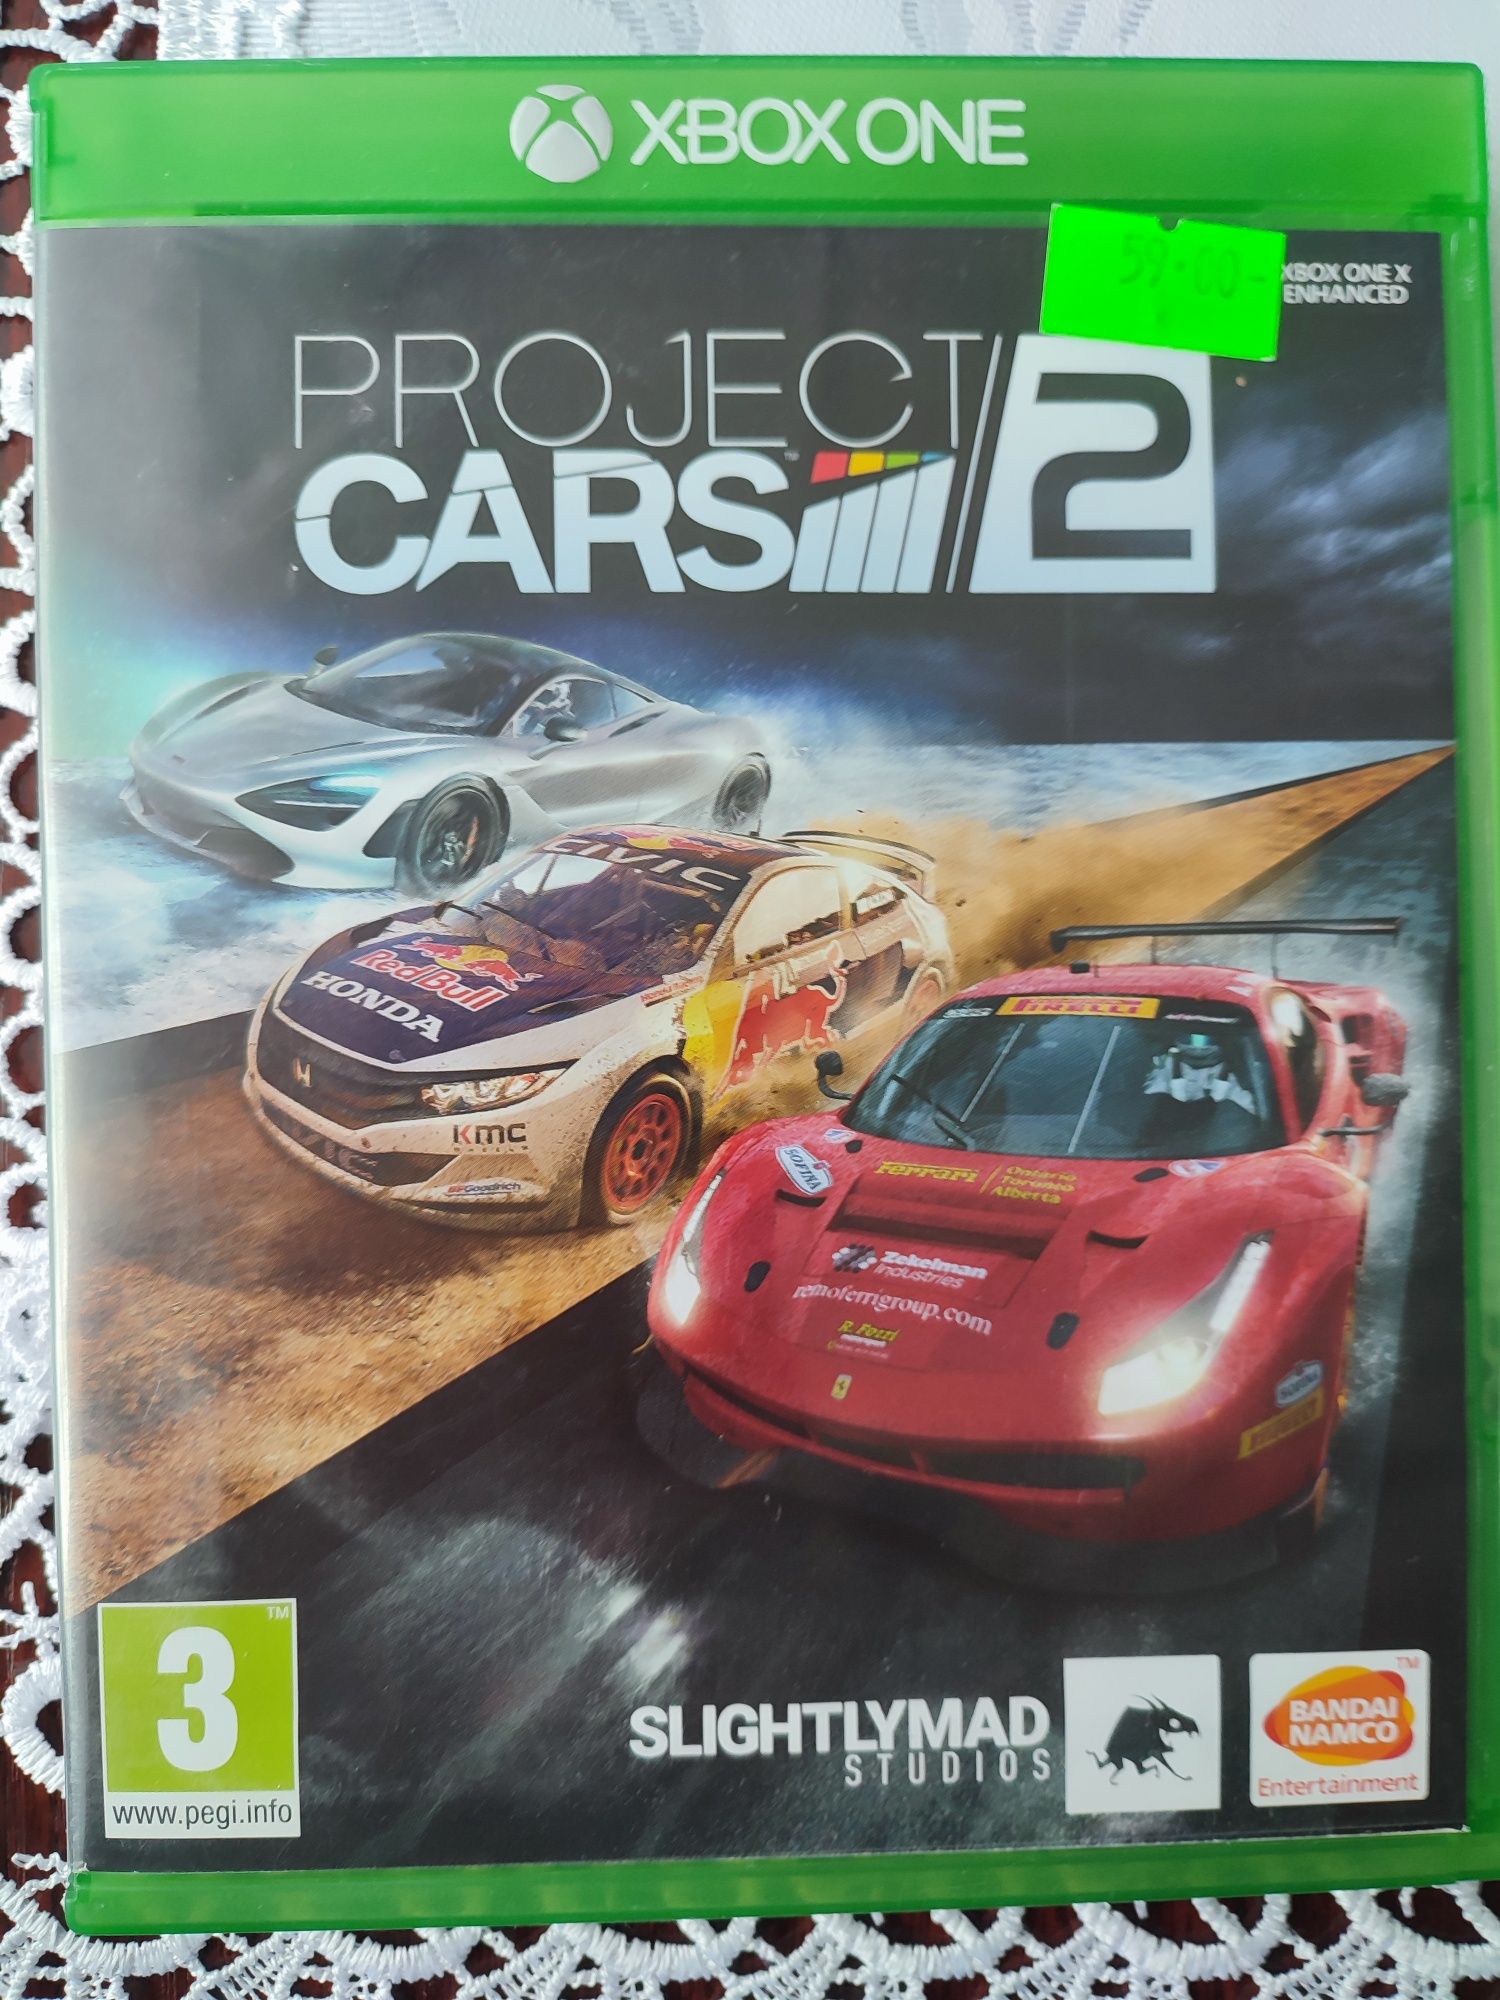 Gra na Xbox one. Projekt cars 2